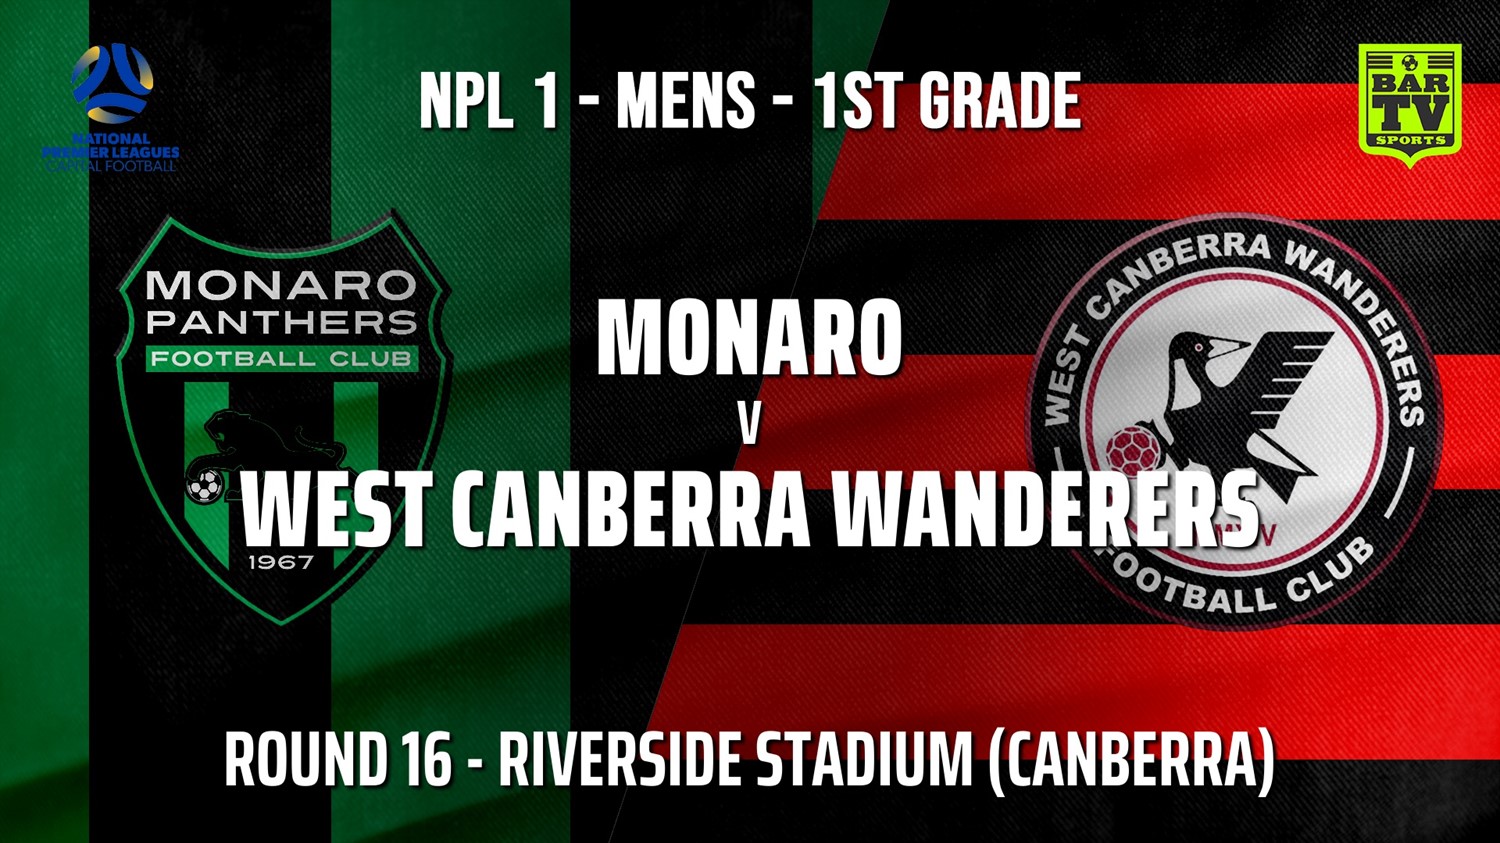 210731-Capital NPL Round 16 - Monaro Panthers FC v West Canberra Wanderers Slate Image